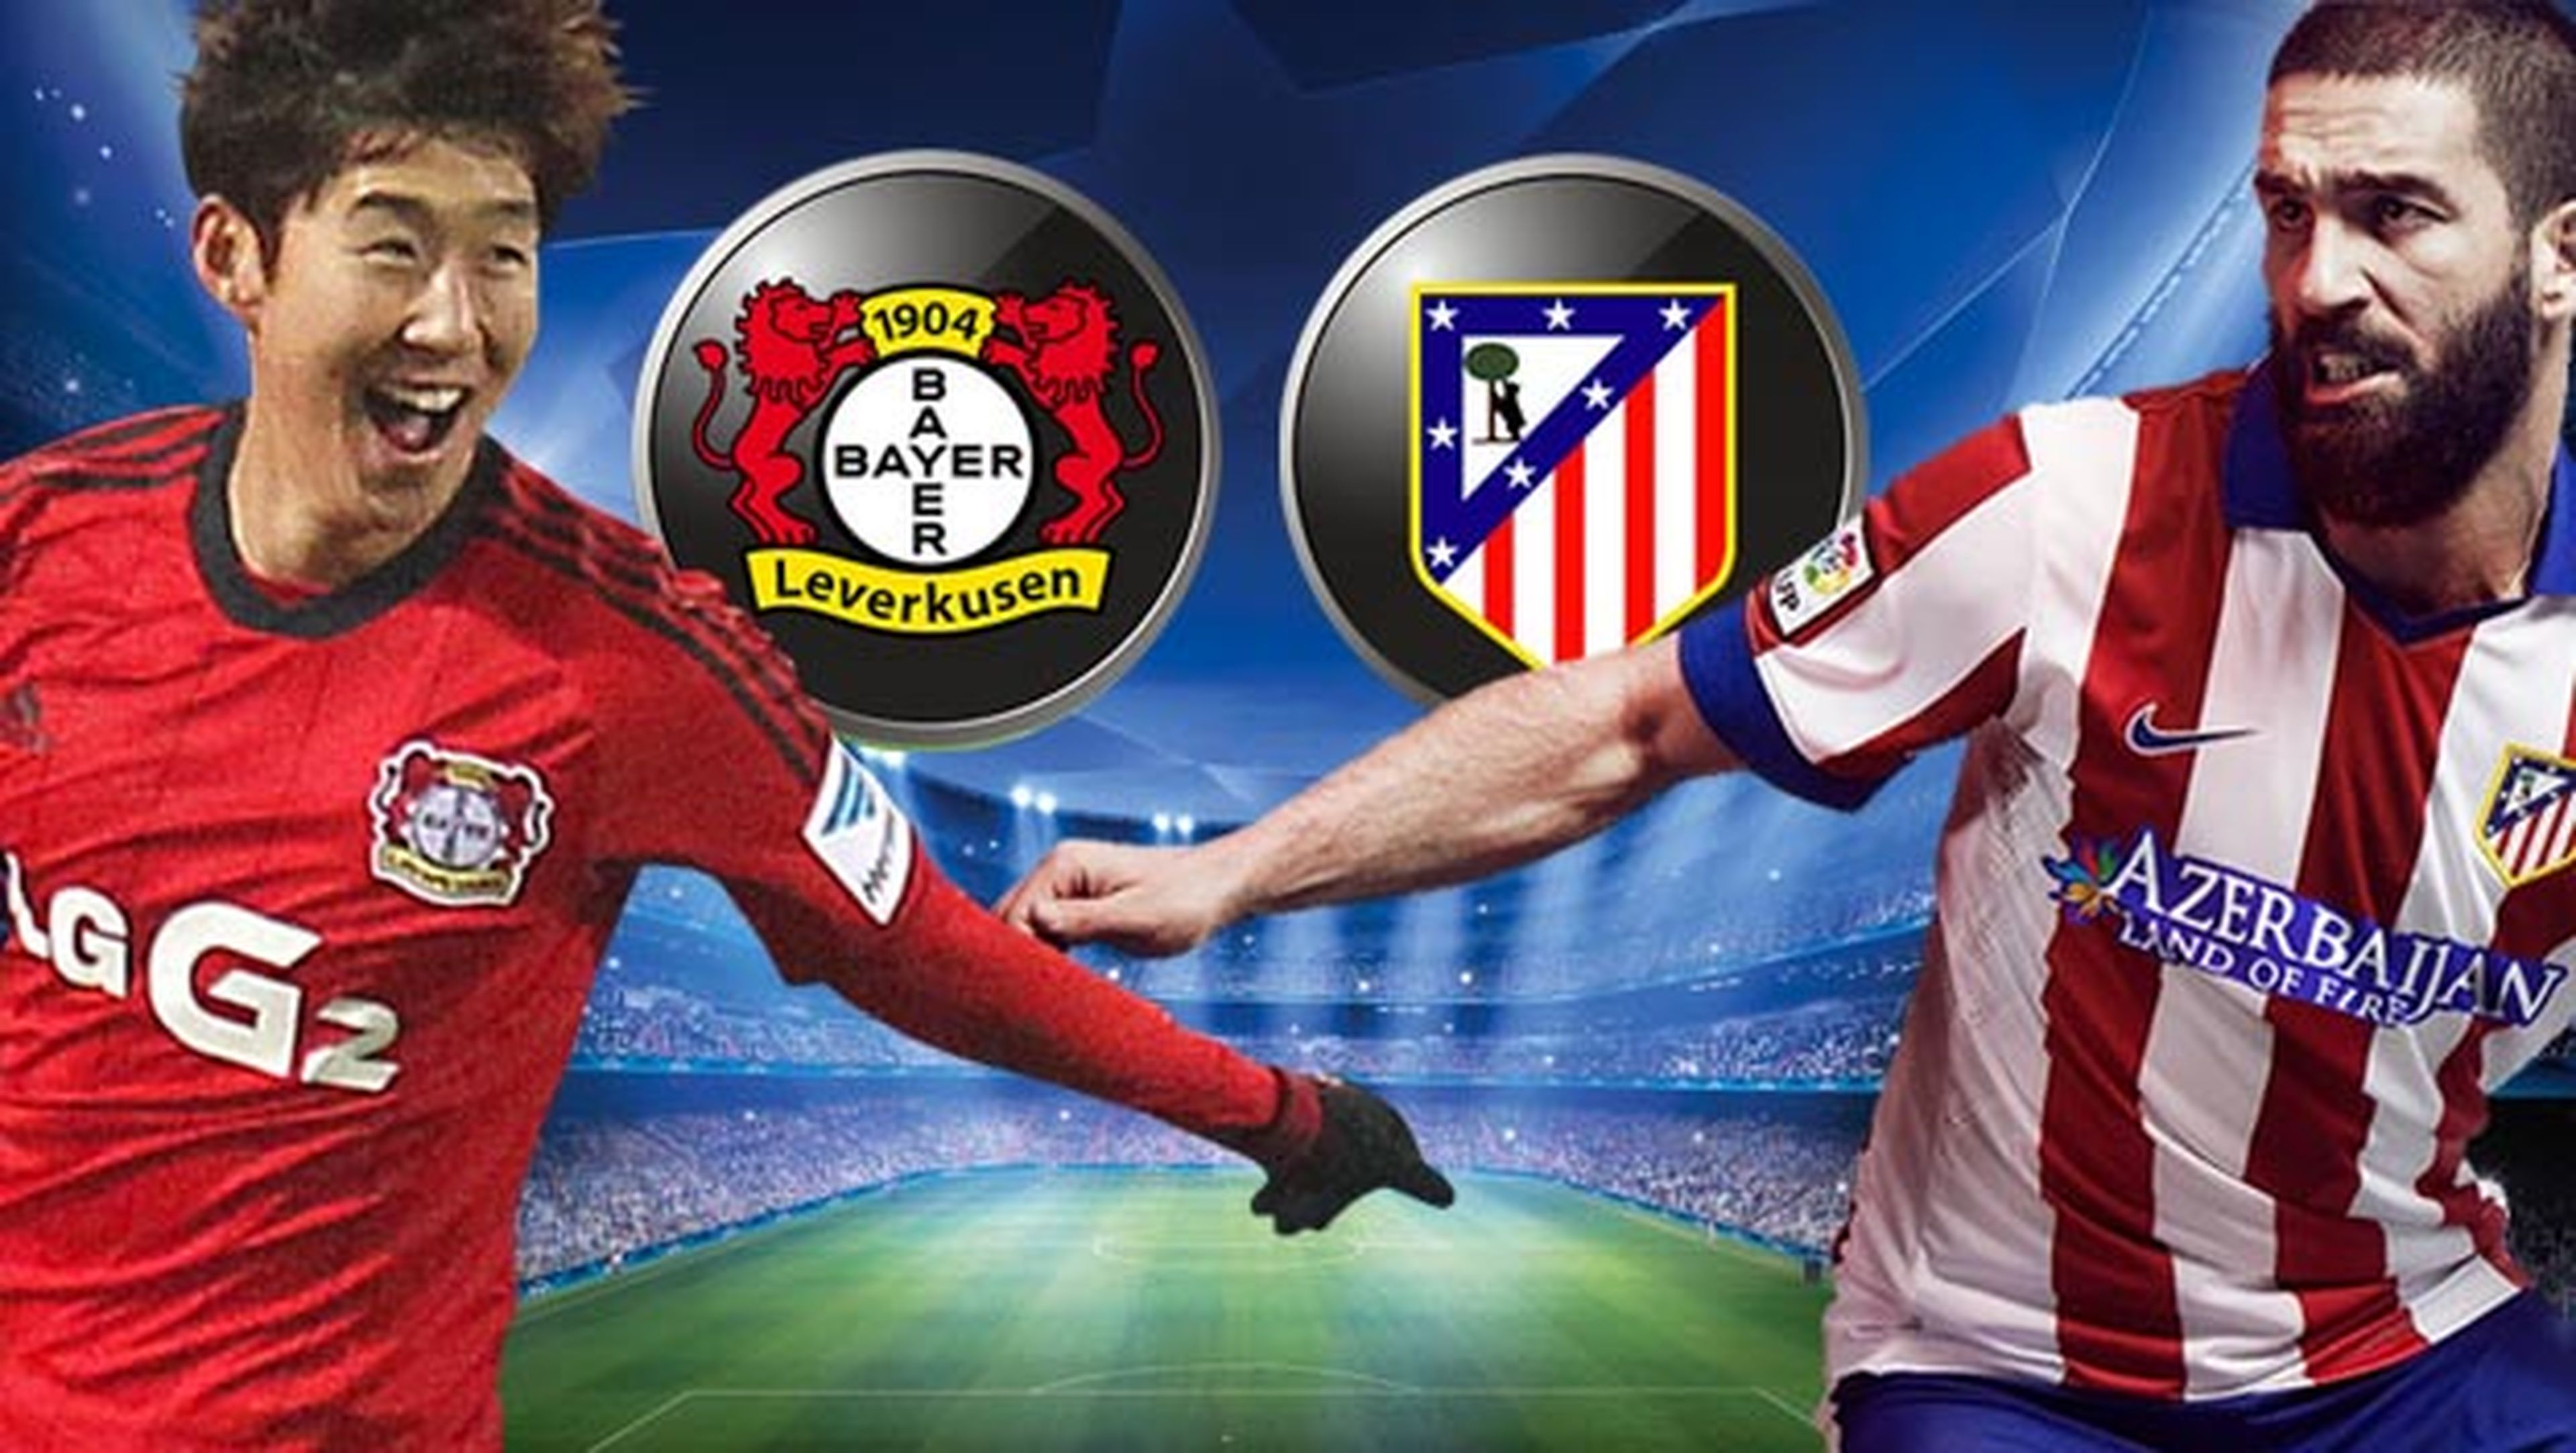 Ver online el Bayer Leverkusen - Atlético de Madrid